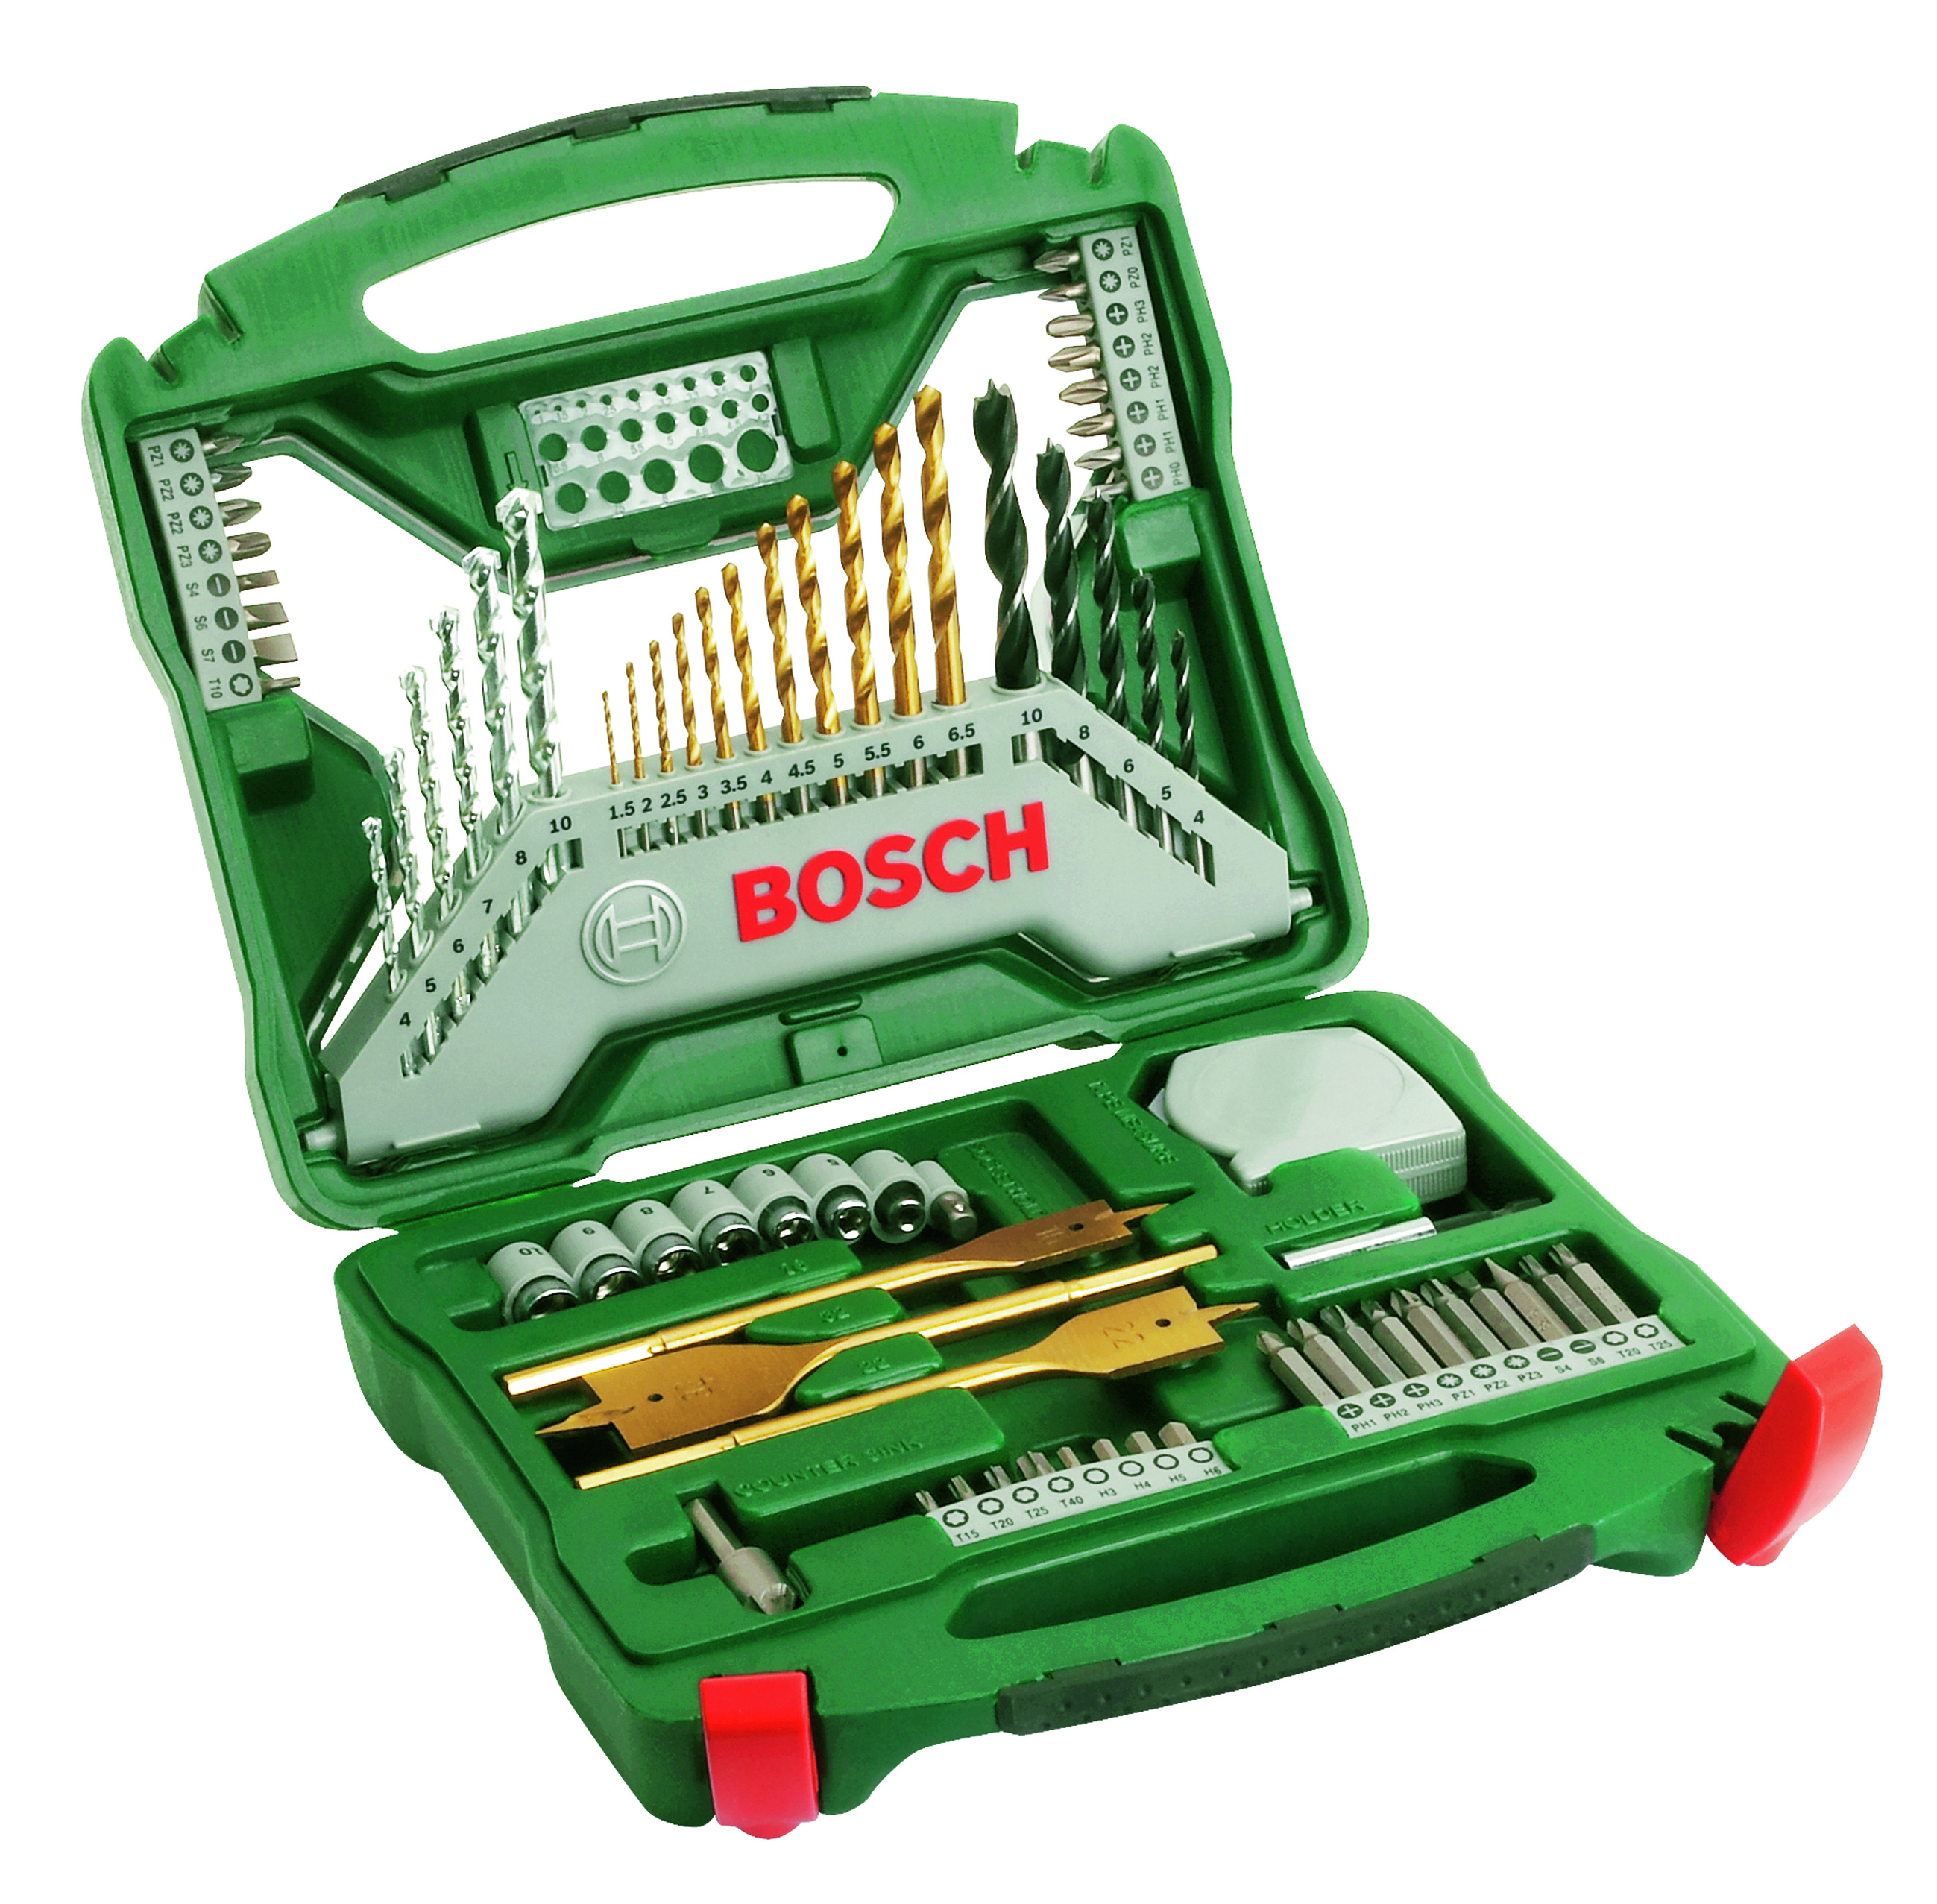 Bosch Bohrer- und Bit-Set PRO Holz Wood 35-teilig inkl Bithalter in PVC-Box 